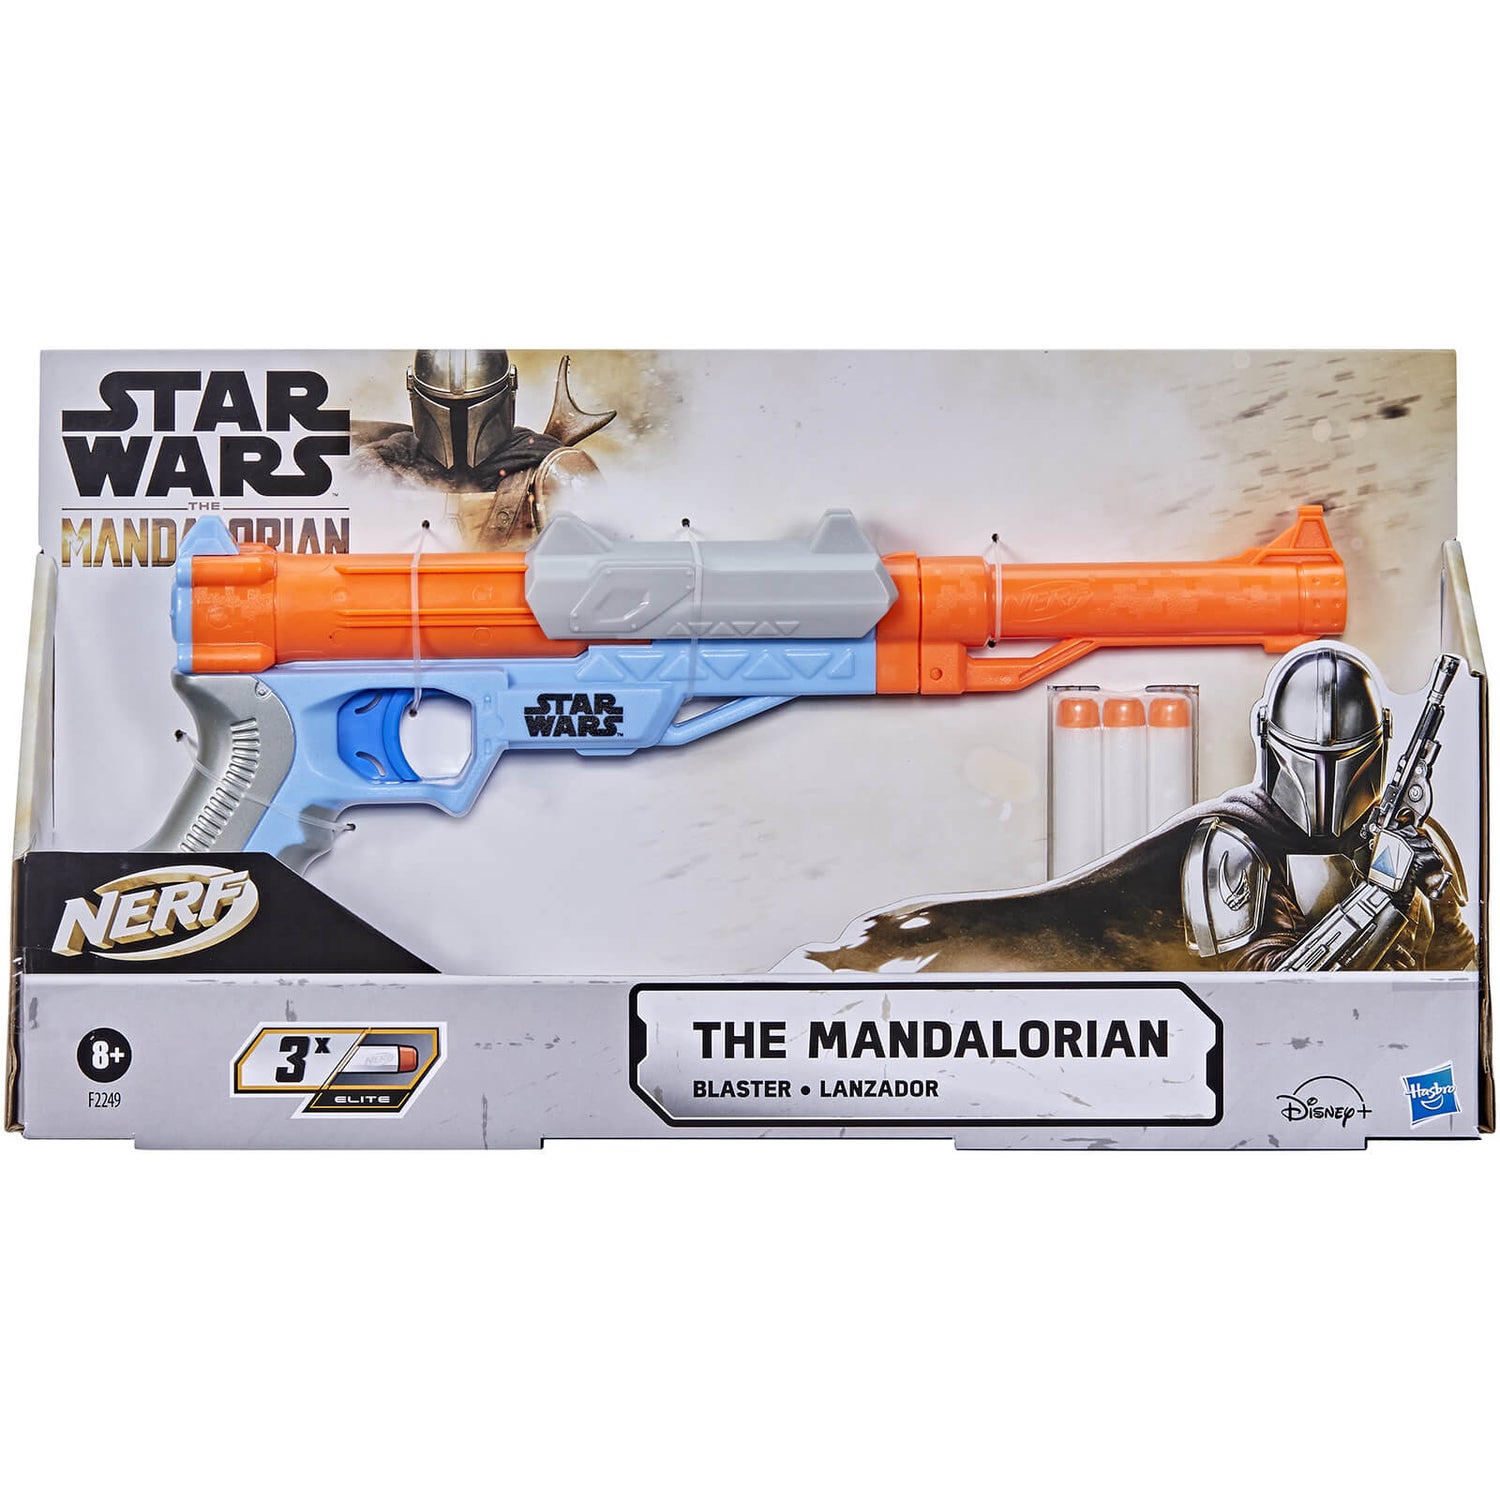 NERF The Mandarlorian Blaster